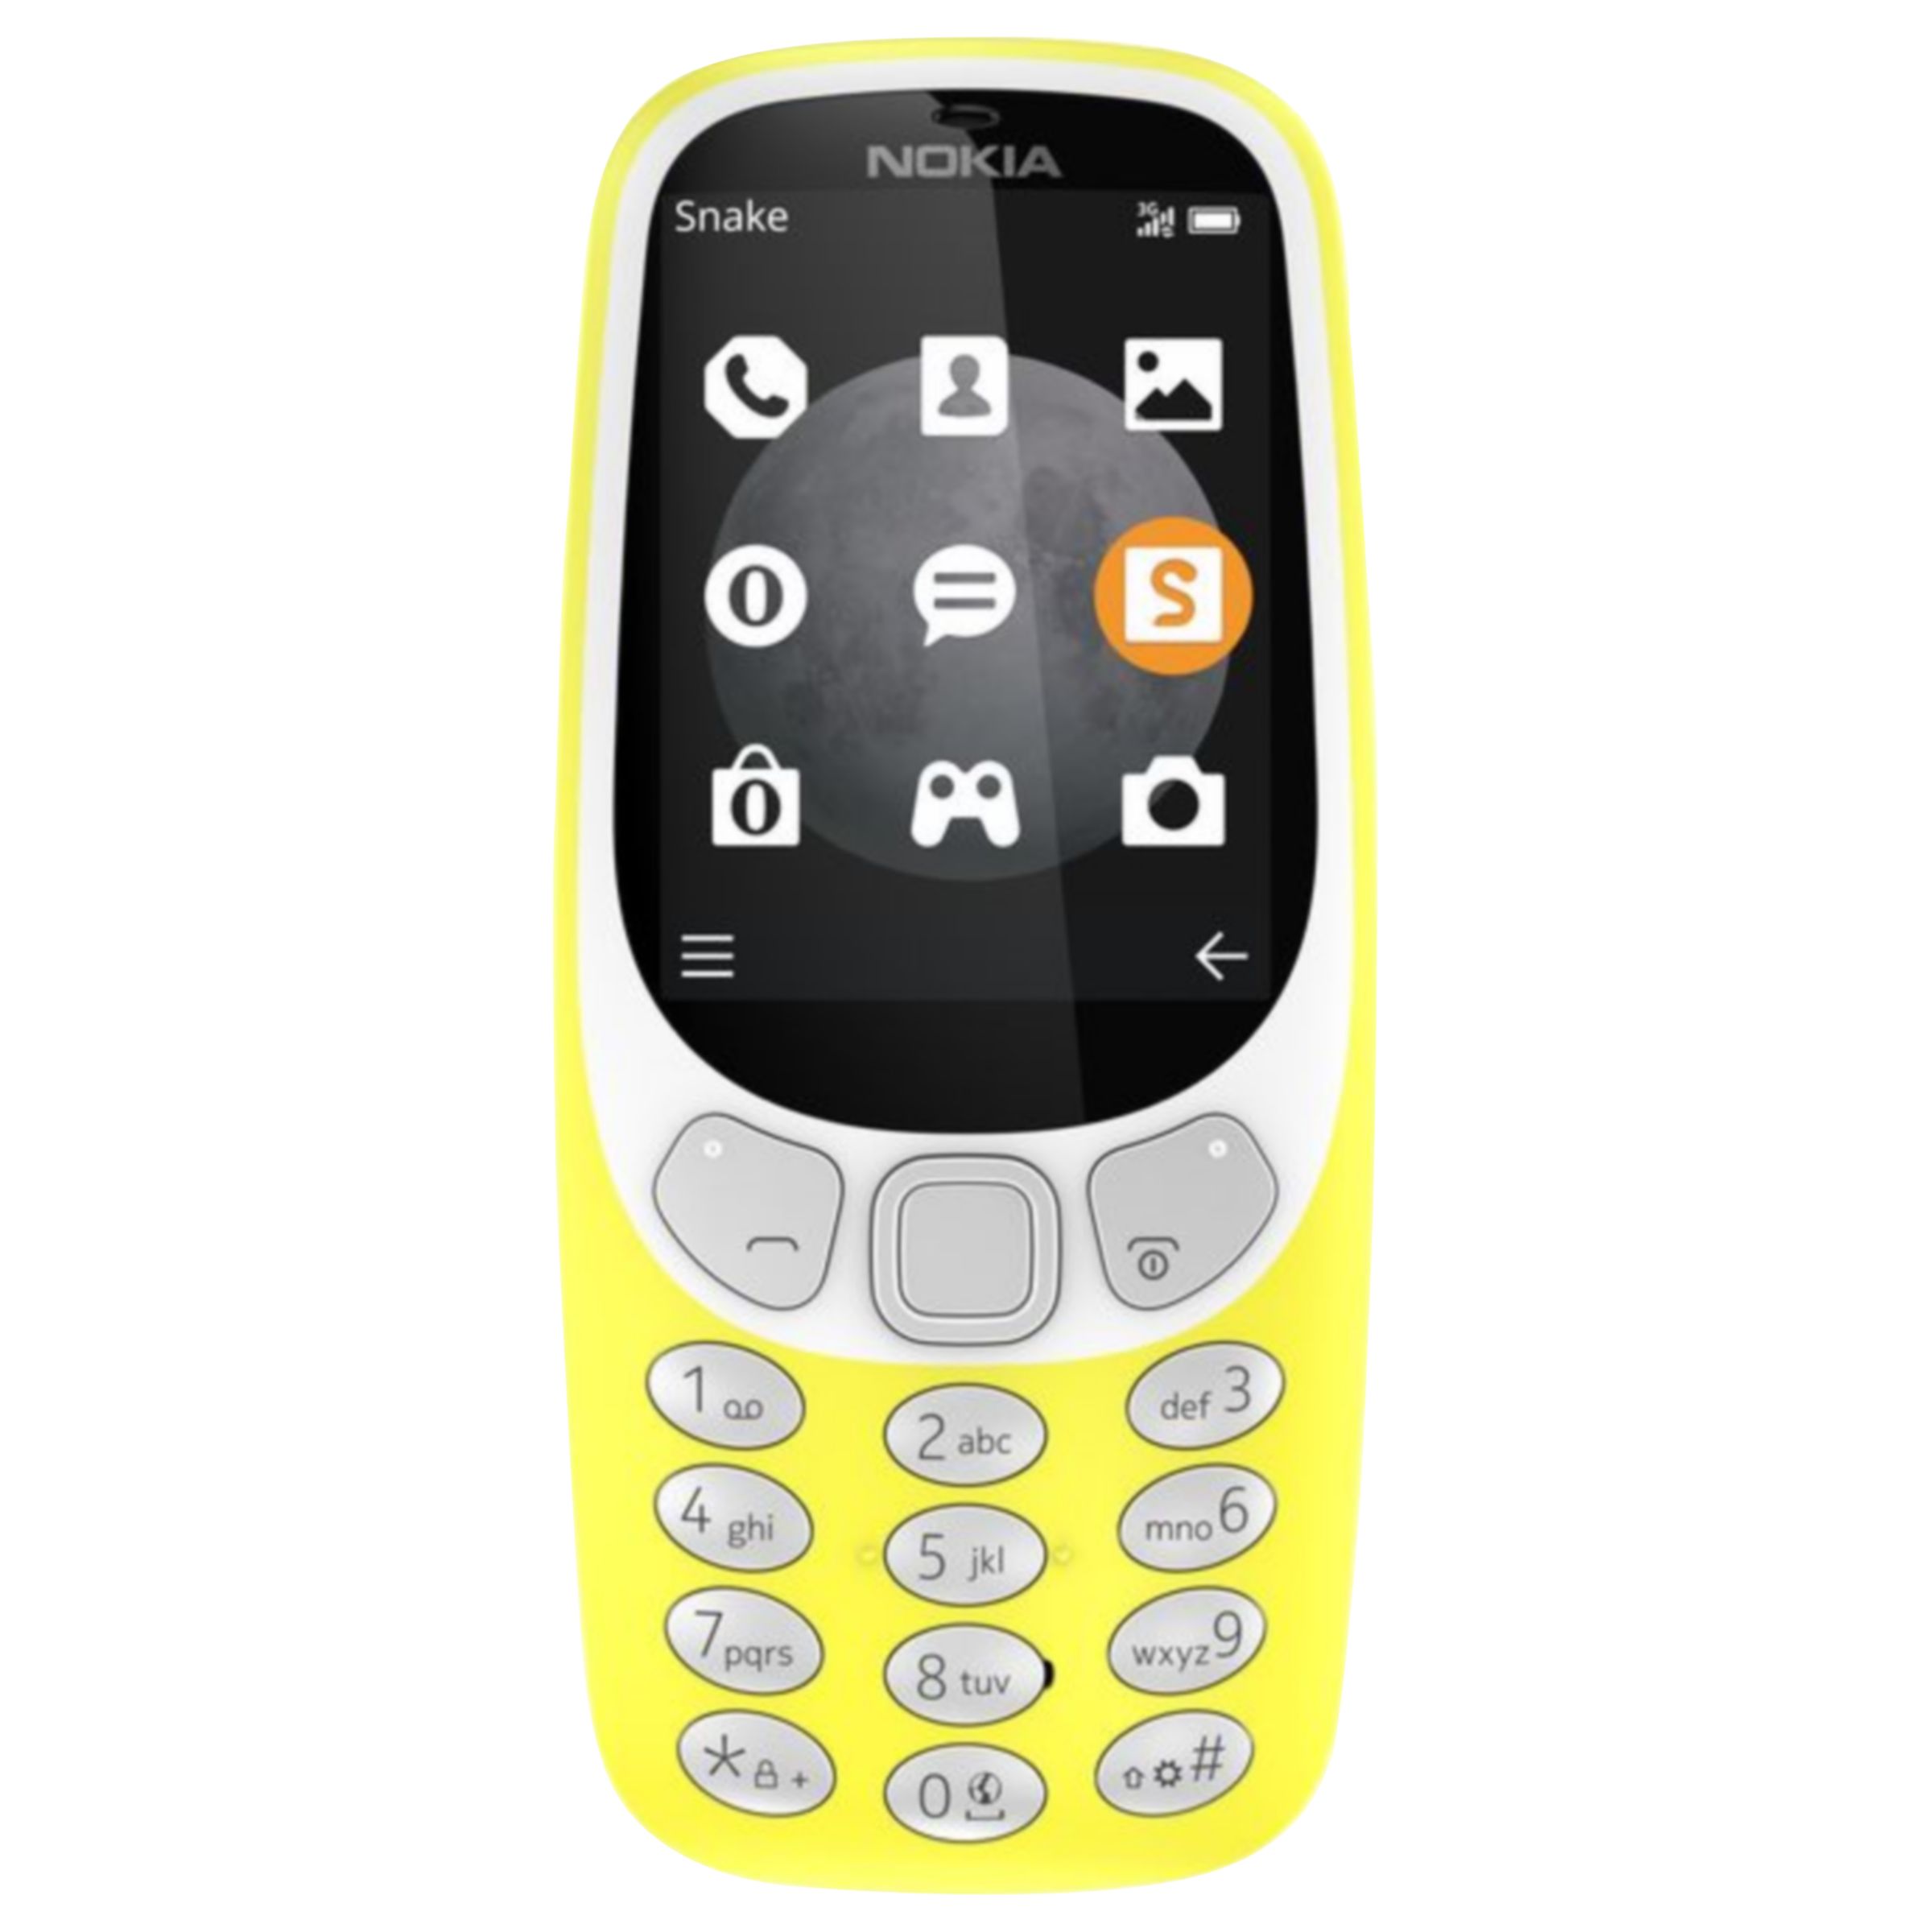 Nokia 3310 Mobile Phone, 64MB, 3G, 2.4" QVGA